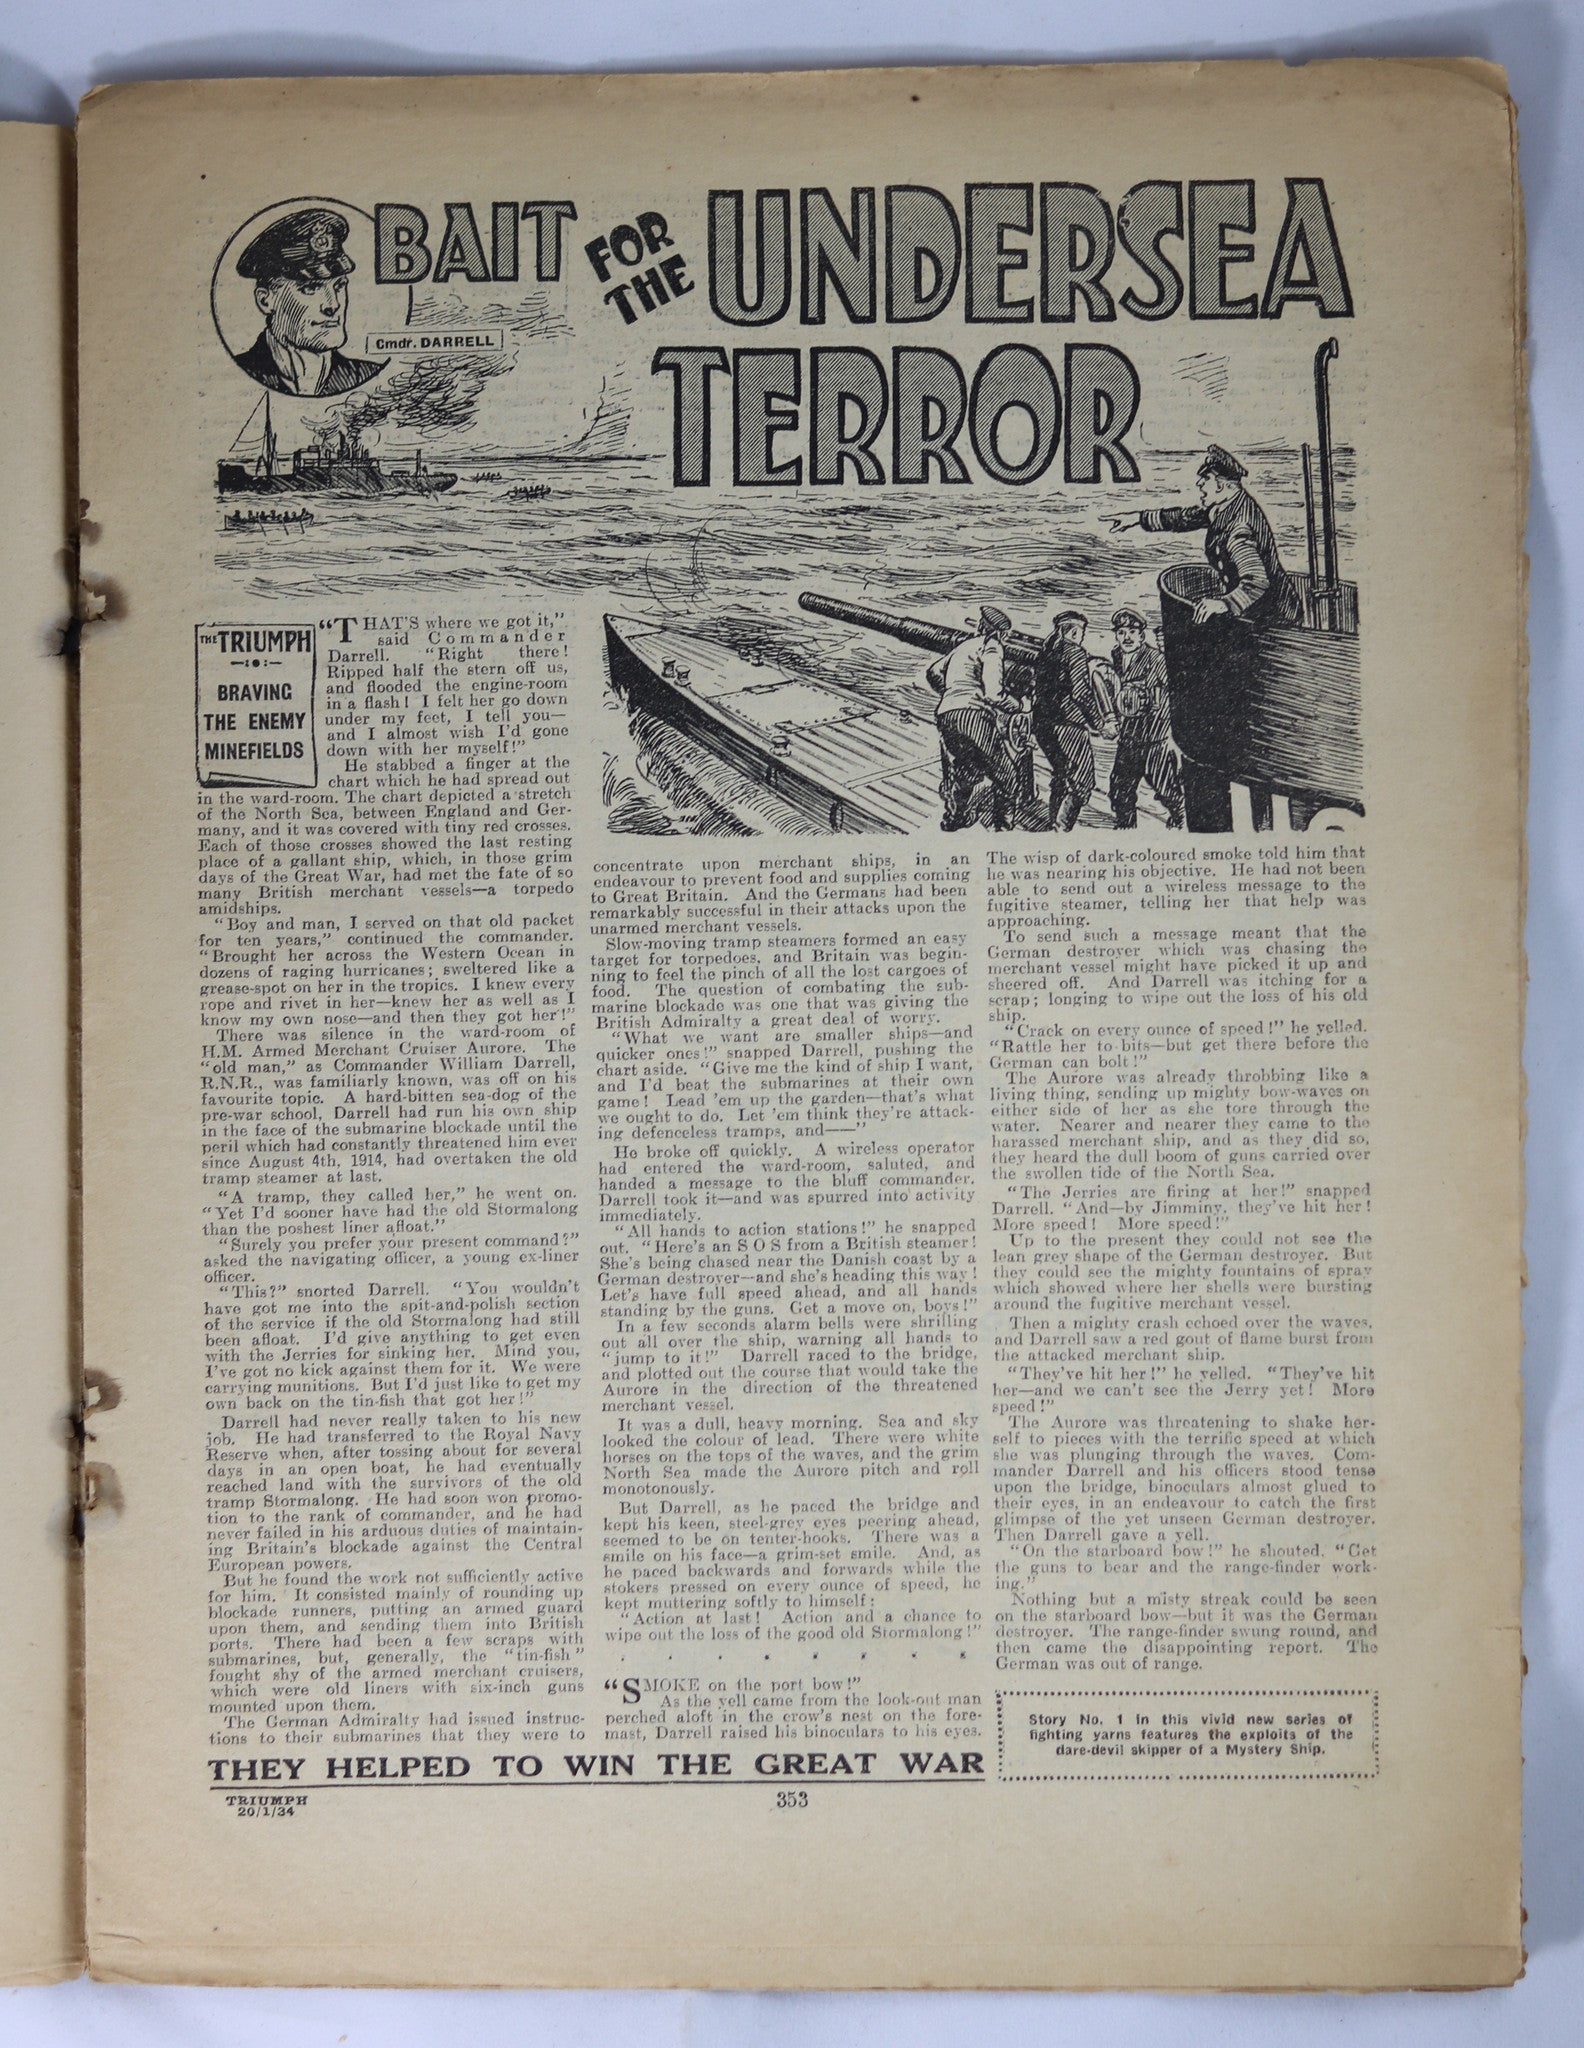 The Triumph 1-17-31 U.K. Boys Story Paper Magazine Round The